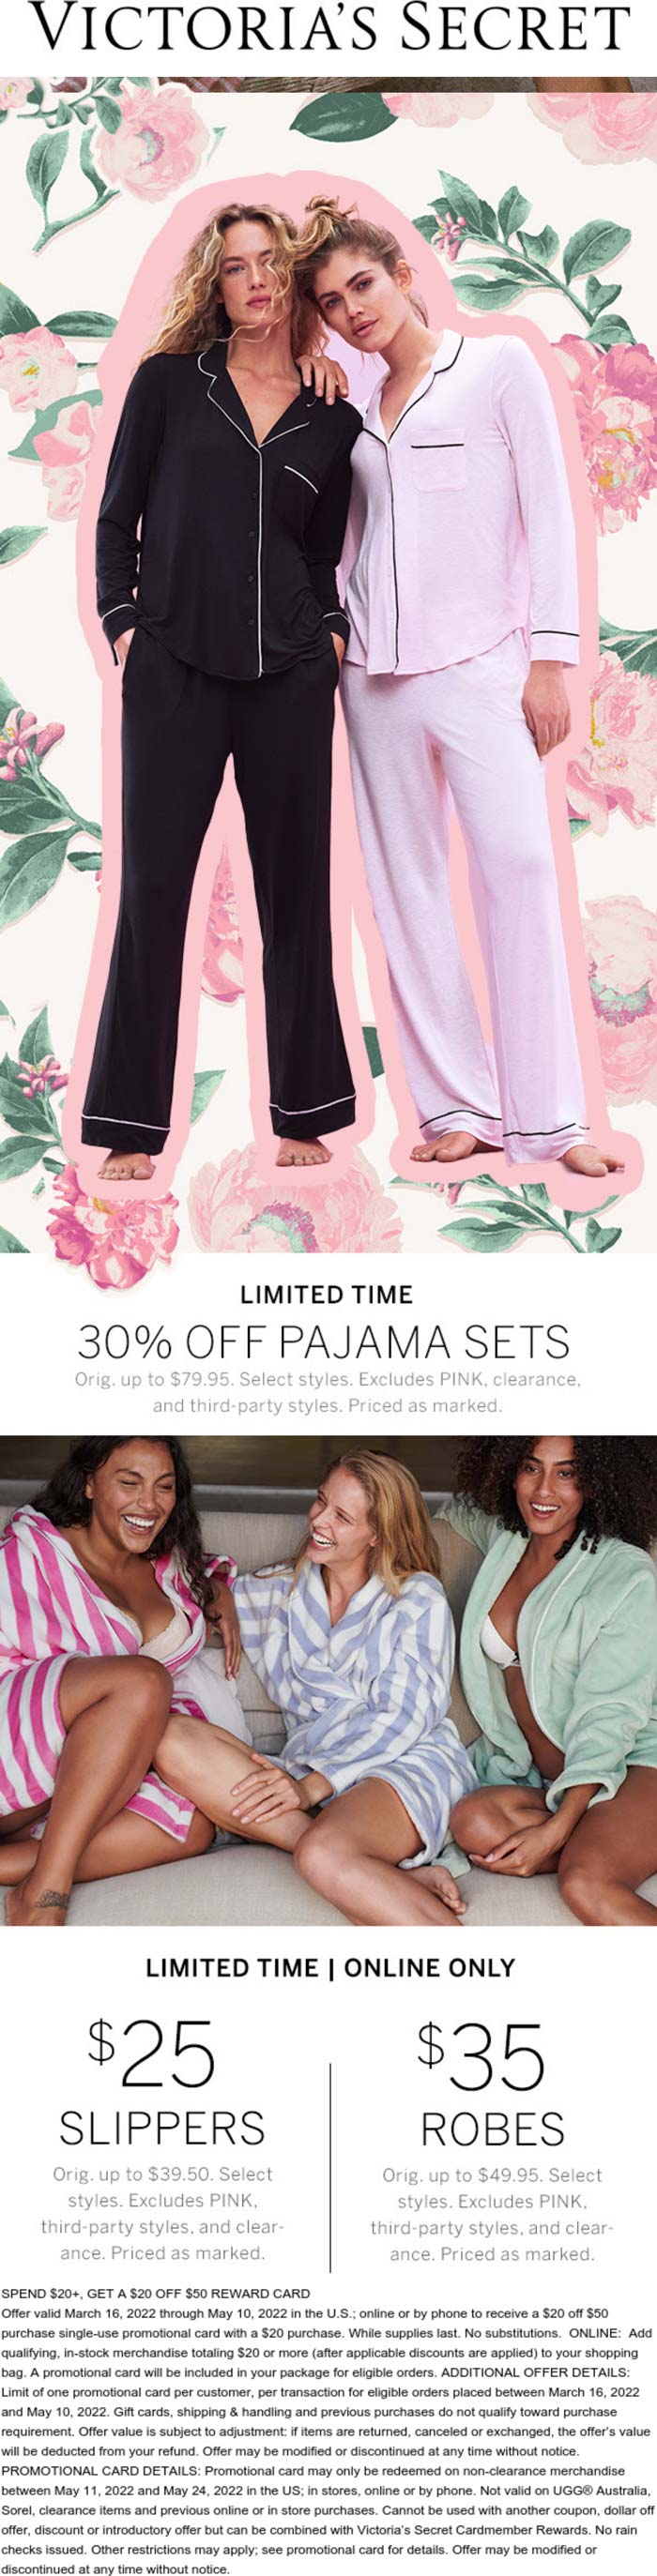 Victorias Secret stores Coupon  30% off pajama sets at Victorias Secret #victoriassecret 